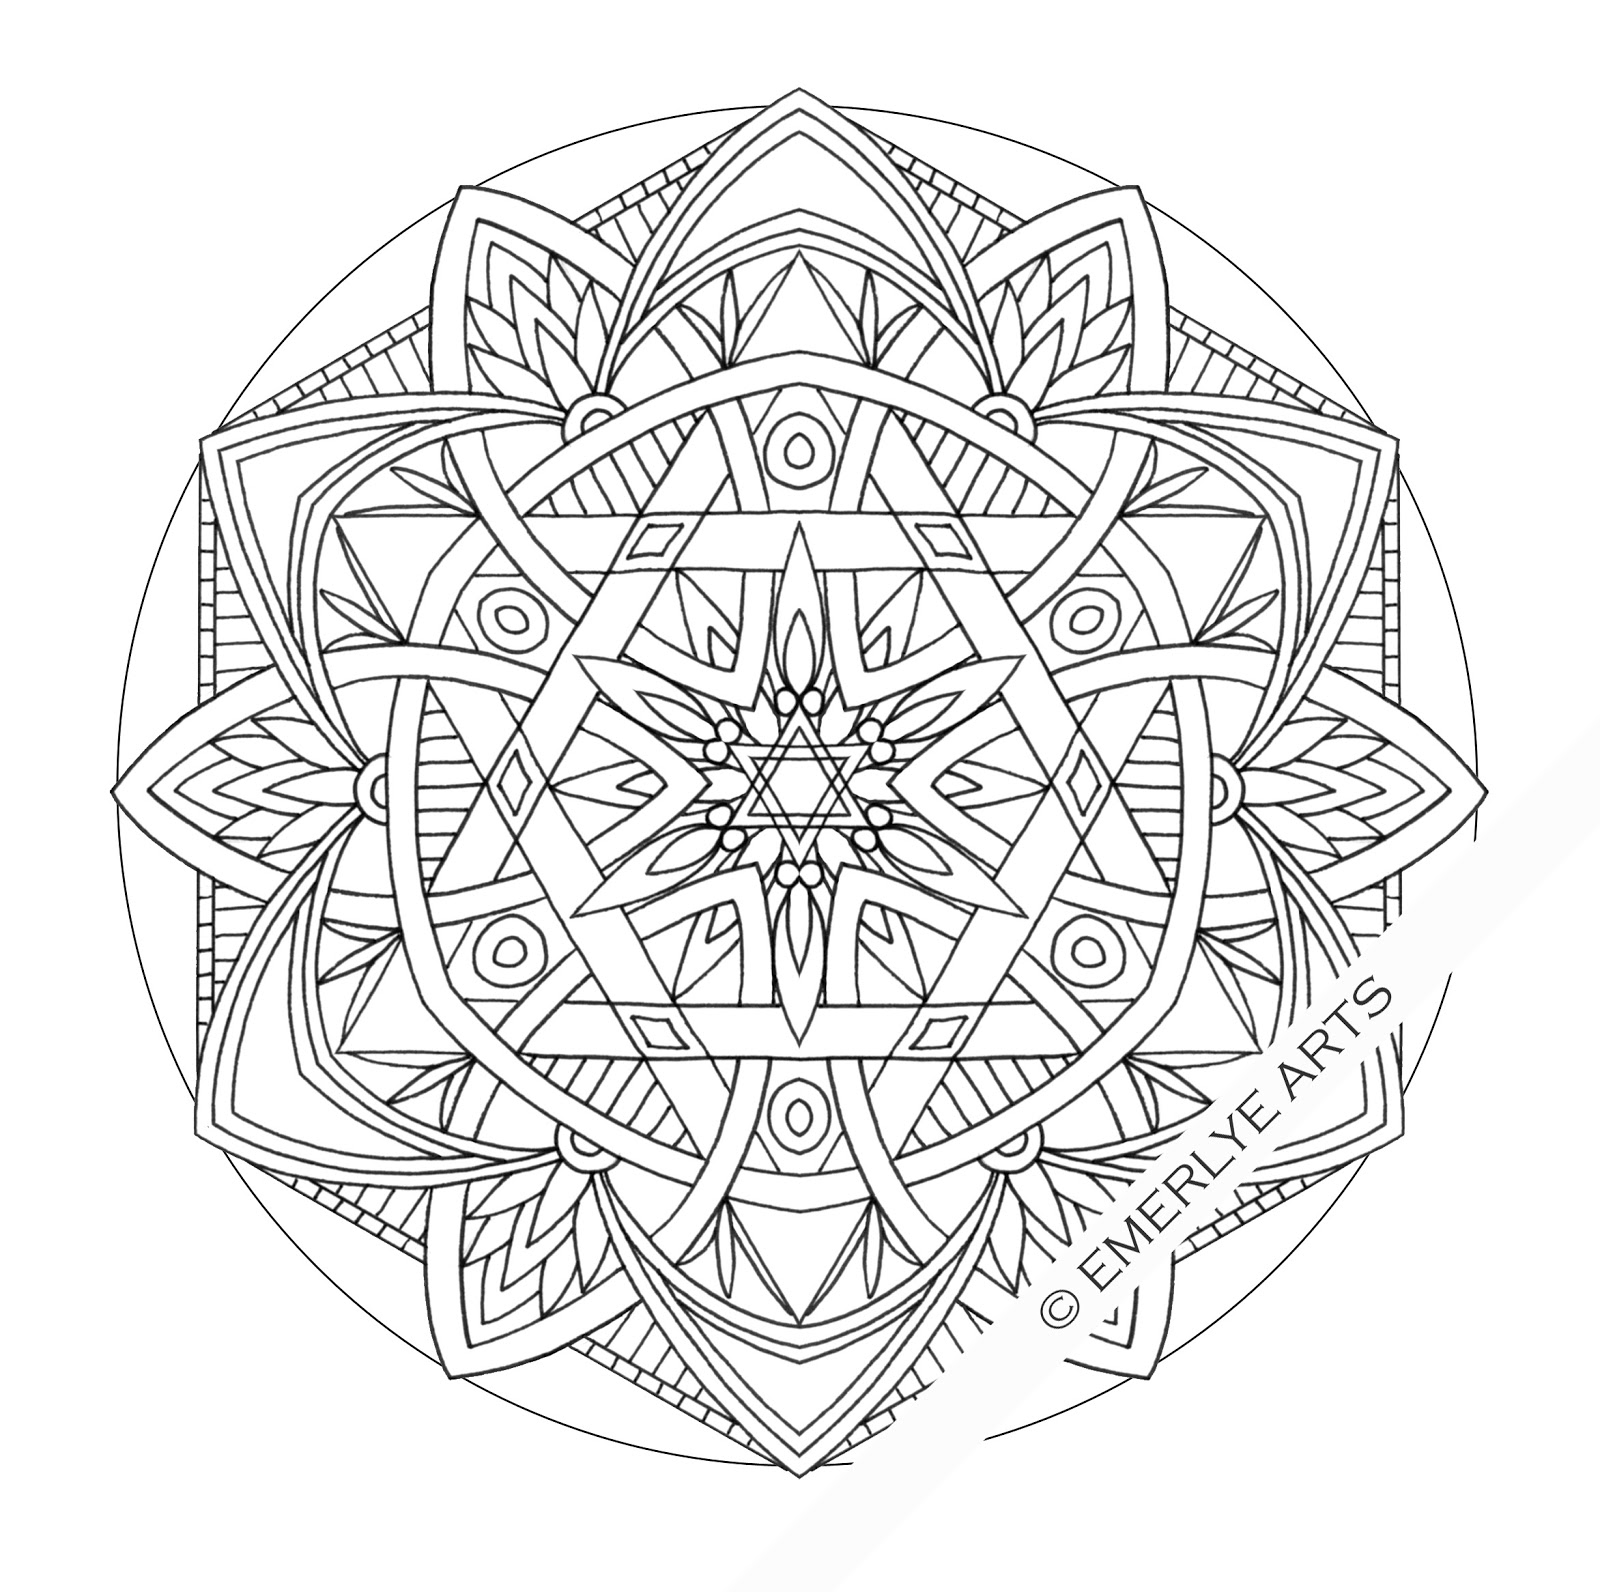 Coloring page: Flowers Mandalas (Mandalas) #117063 - Free Printable Coloring Pages